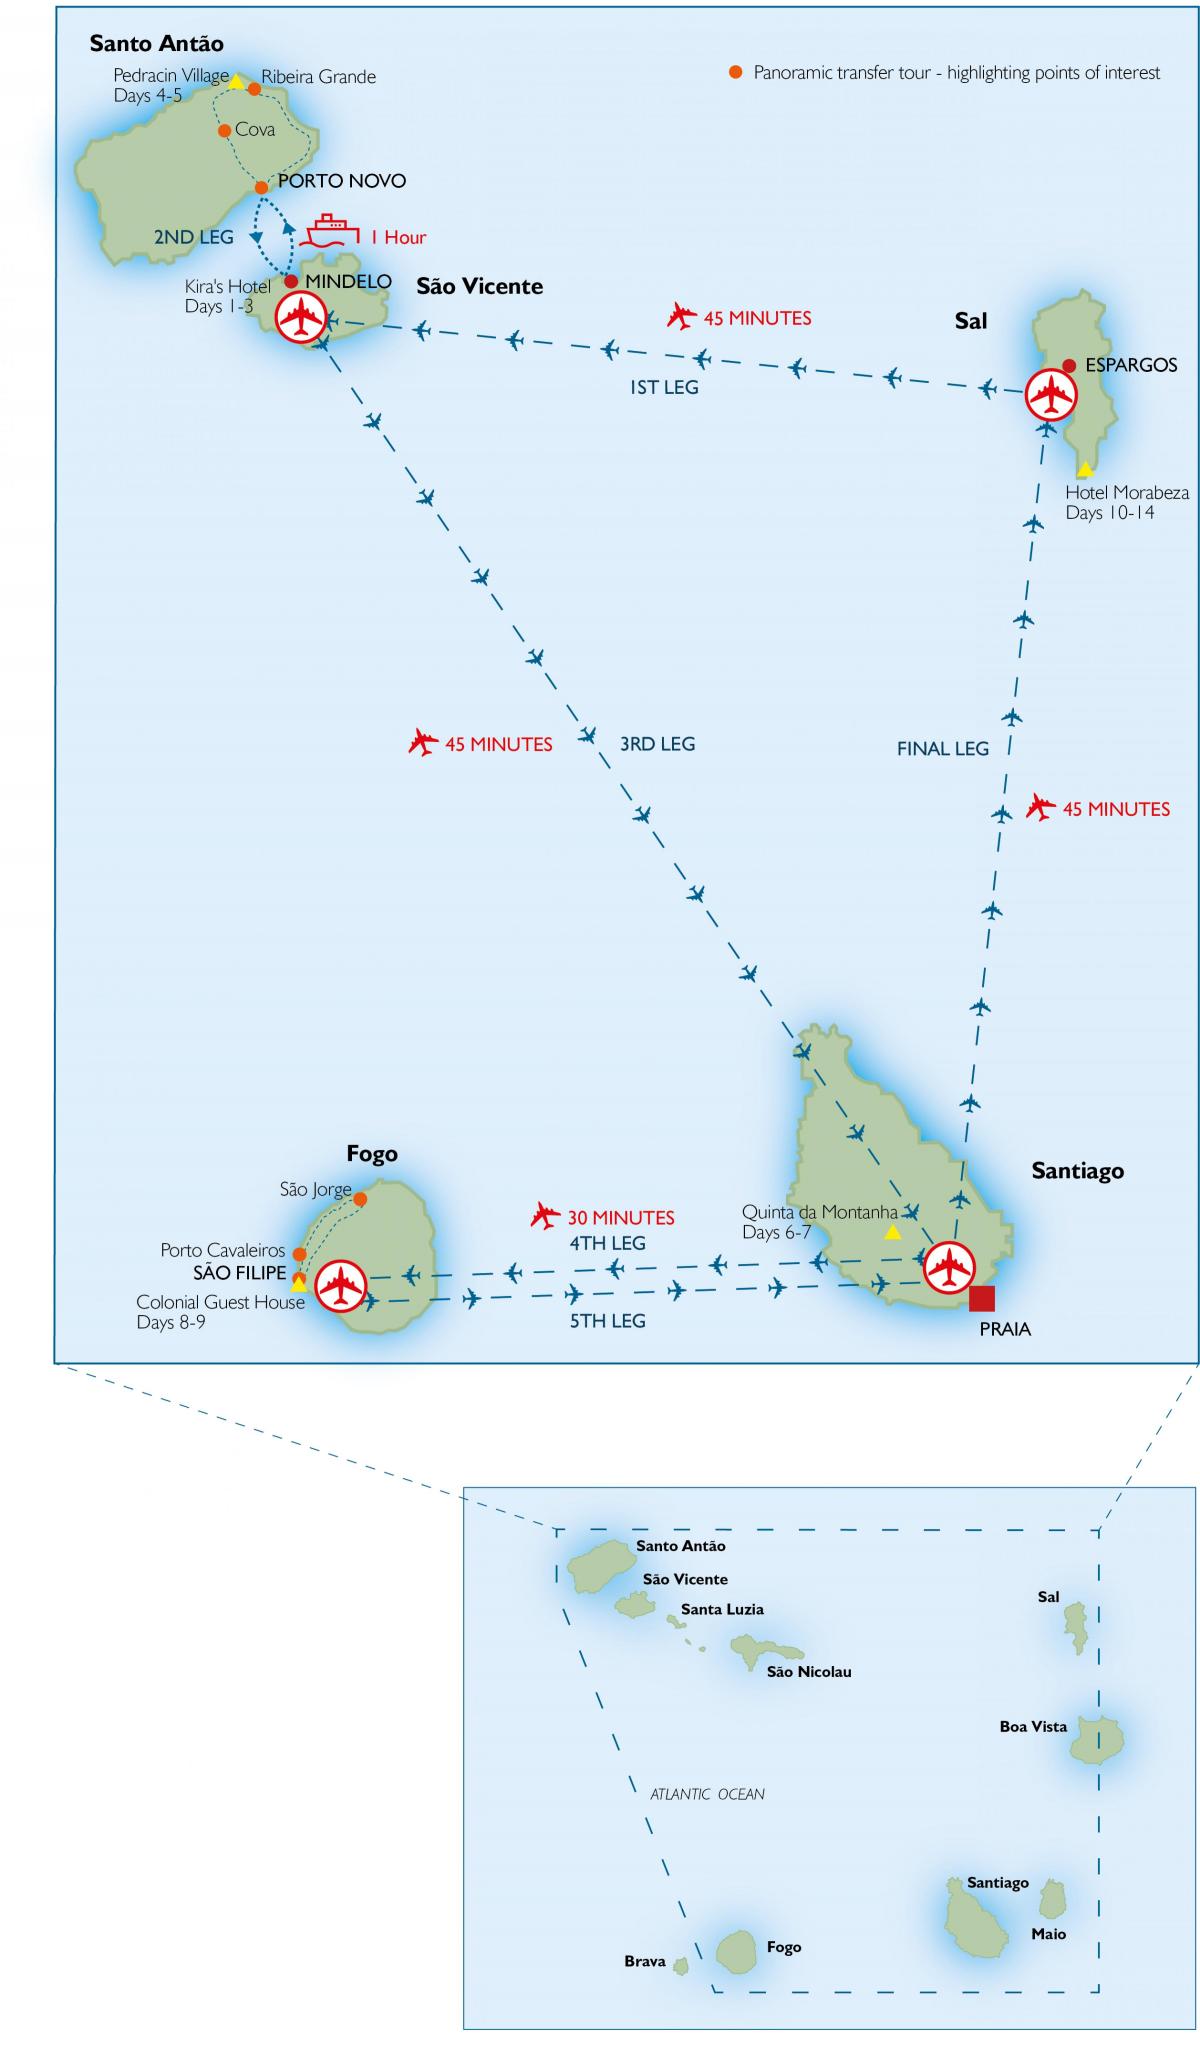 kort over Kap Verde lufthavne